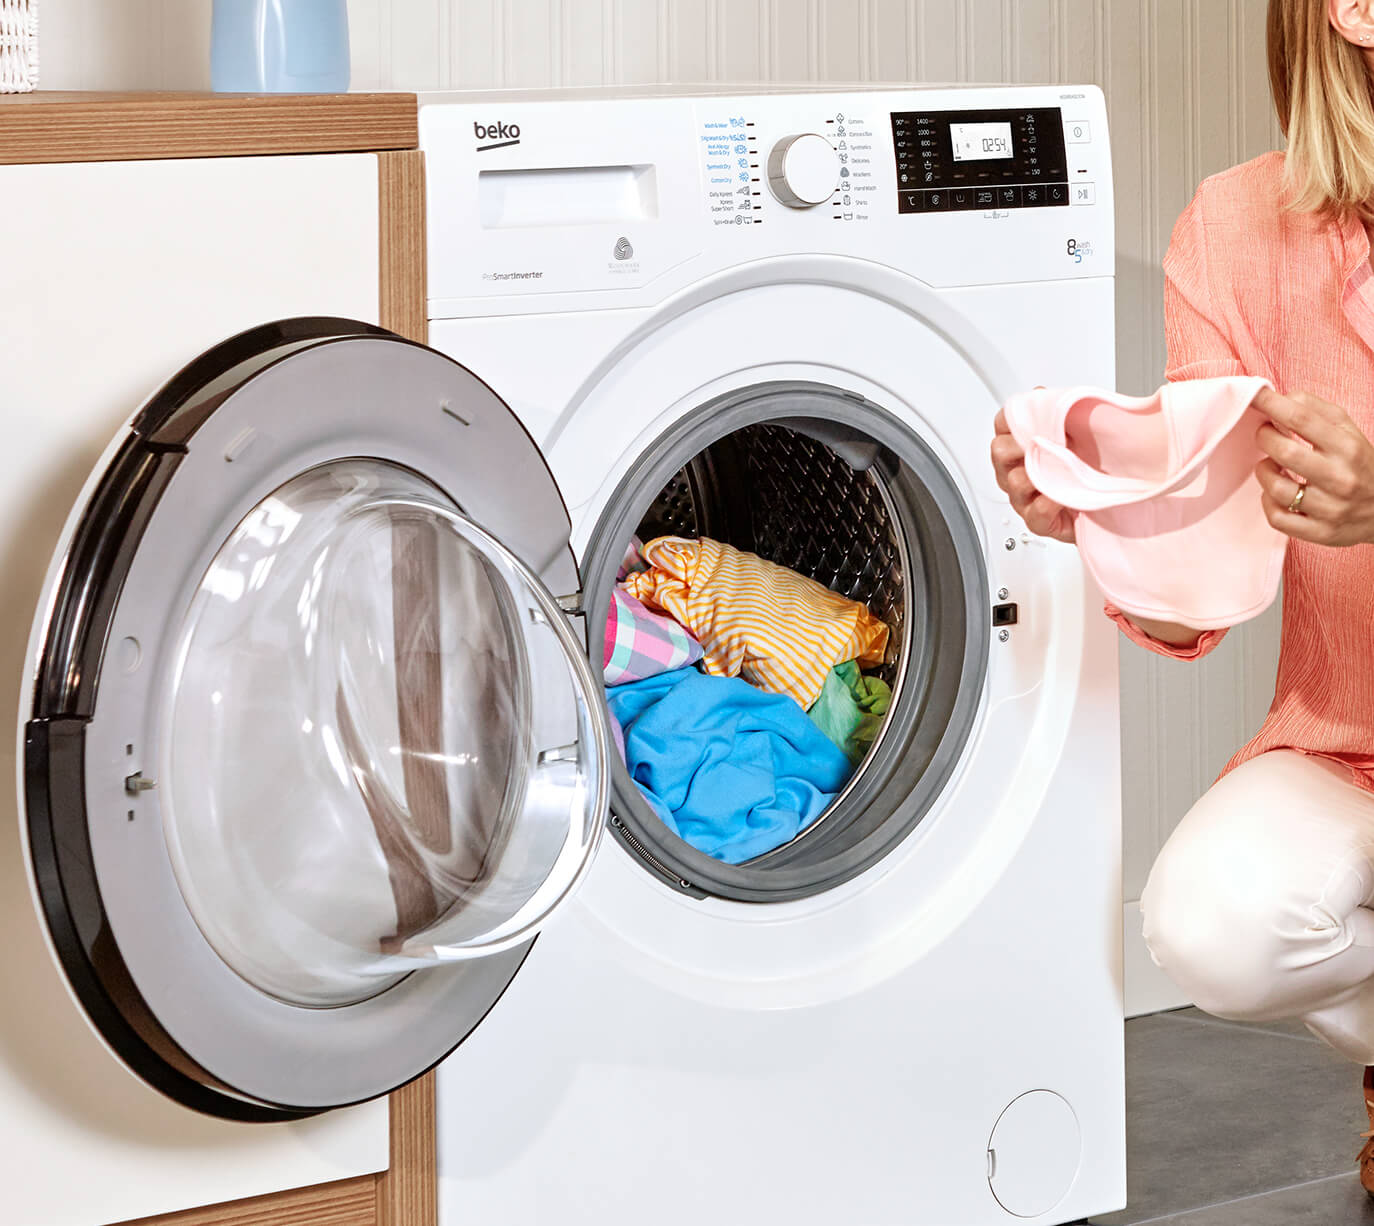 Beko AquaTech Washing Machines: Optimal Water Usage for Eco-Friendly Laundry